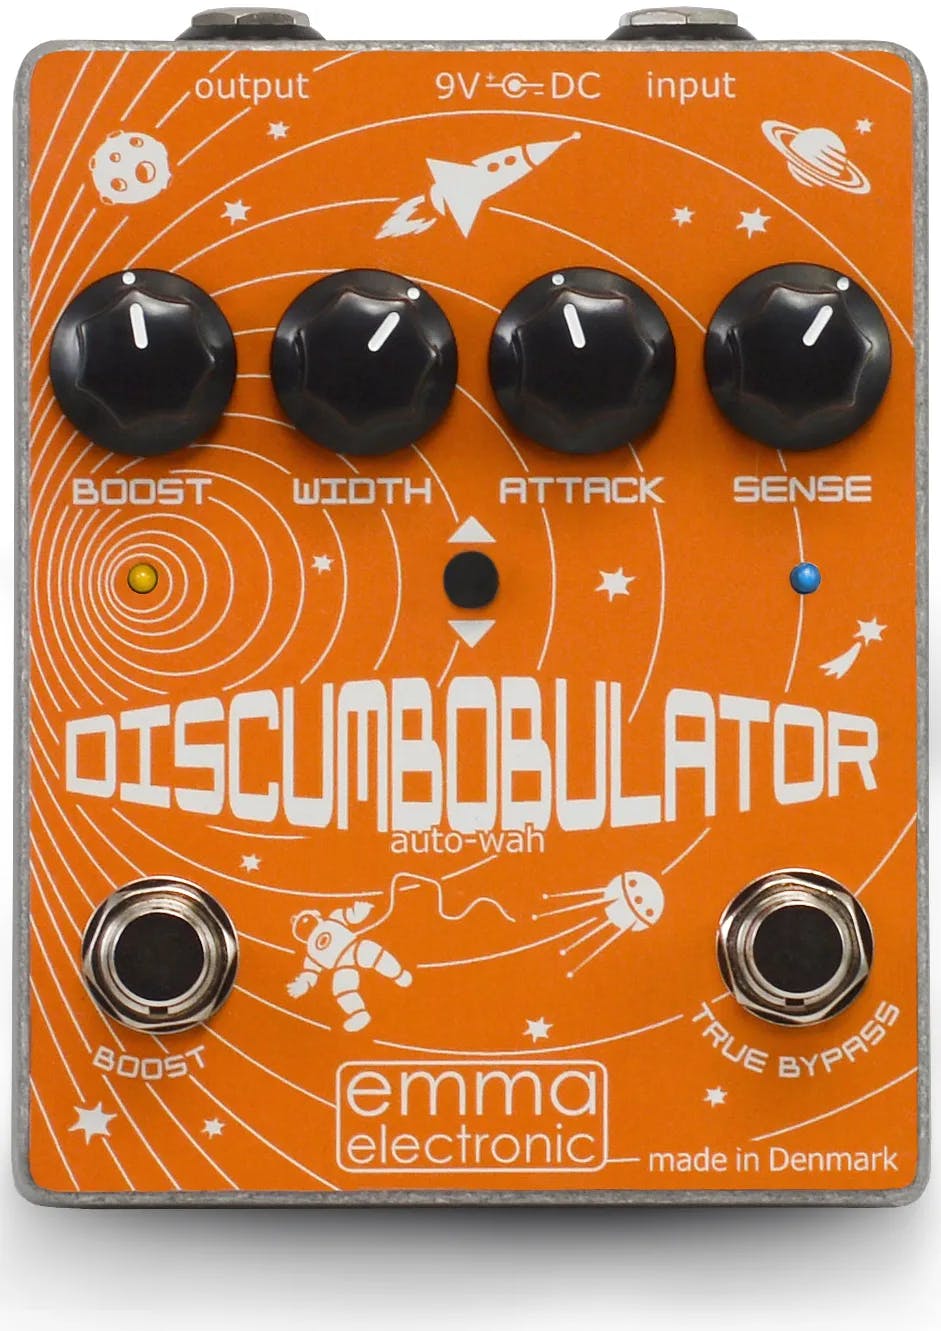 DiscumBOBulator V2 Guitar Pedal By EMMA Electronic